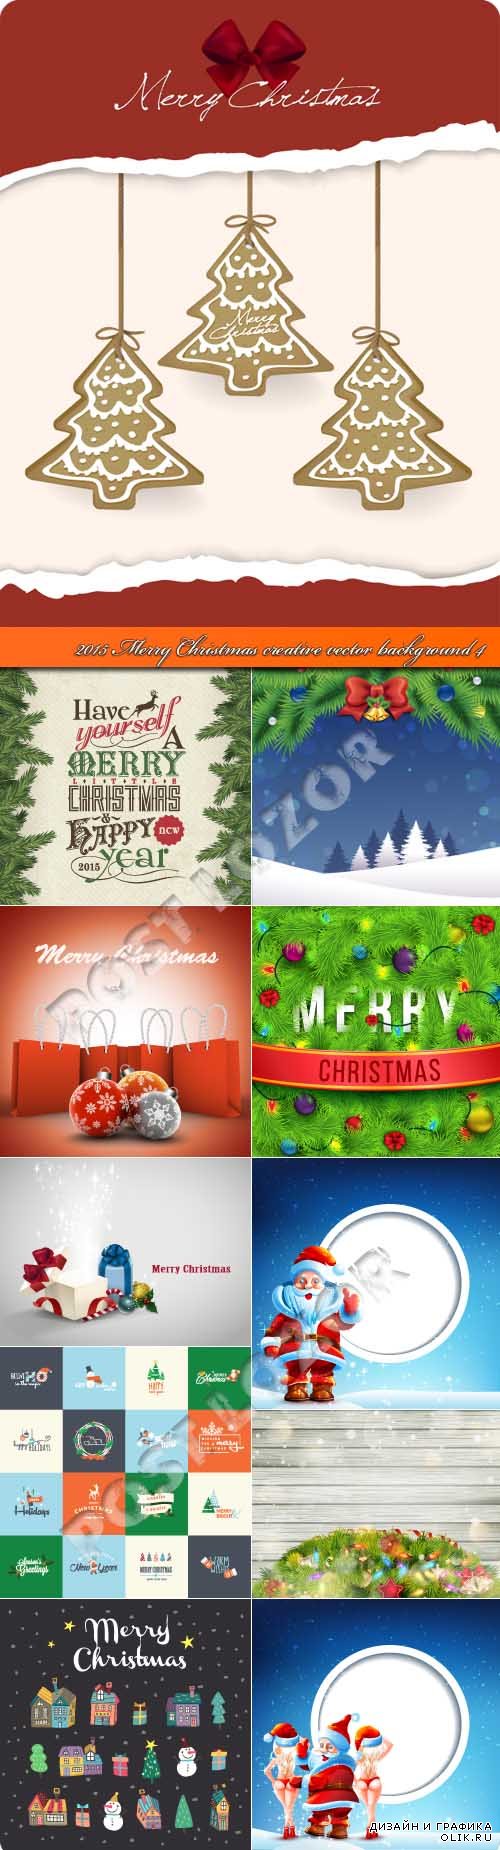 2015 Merry Christmas creative vector background 4